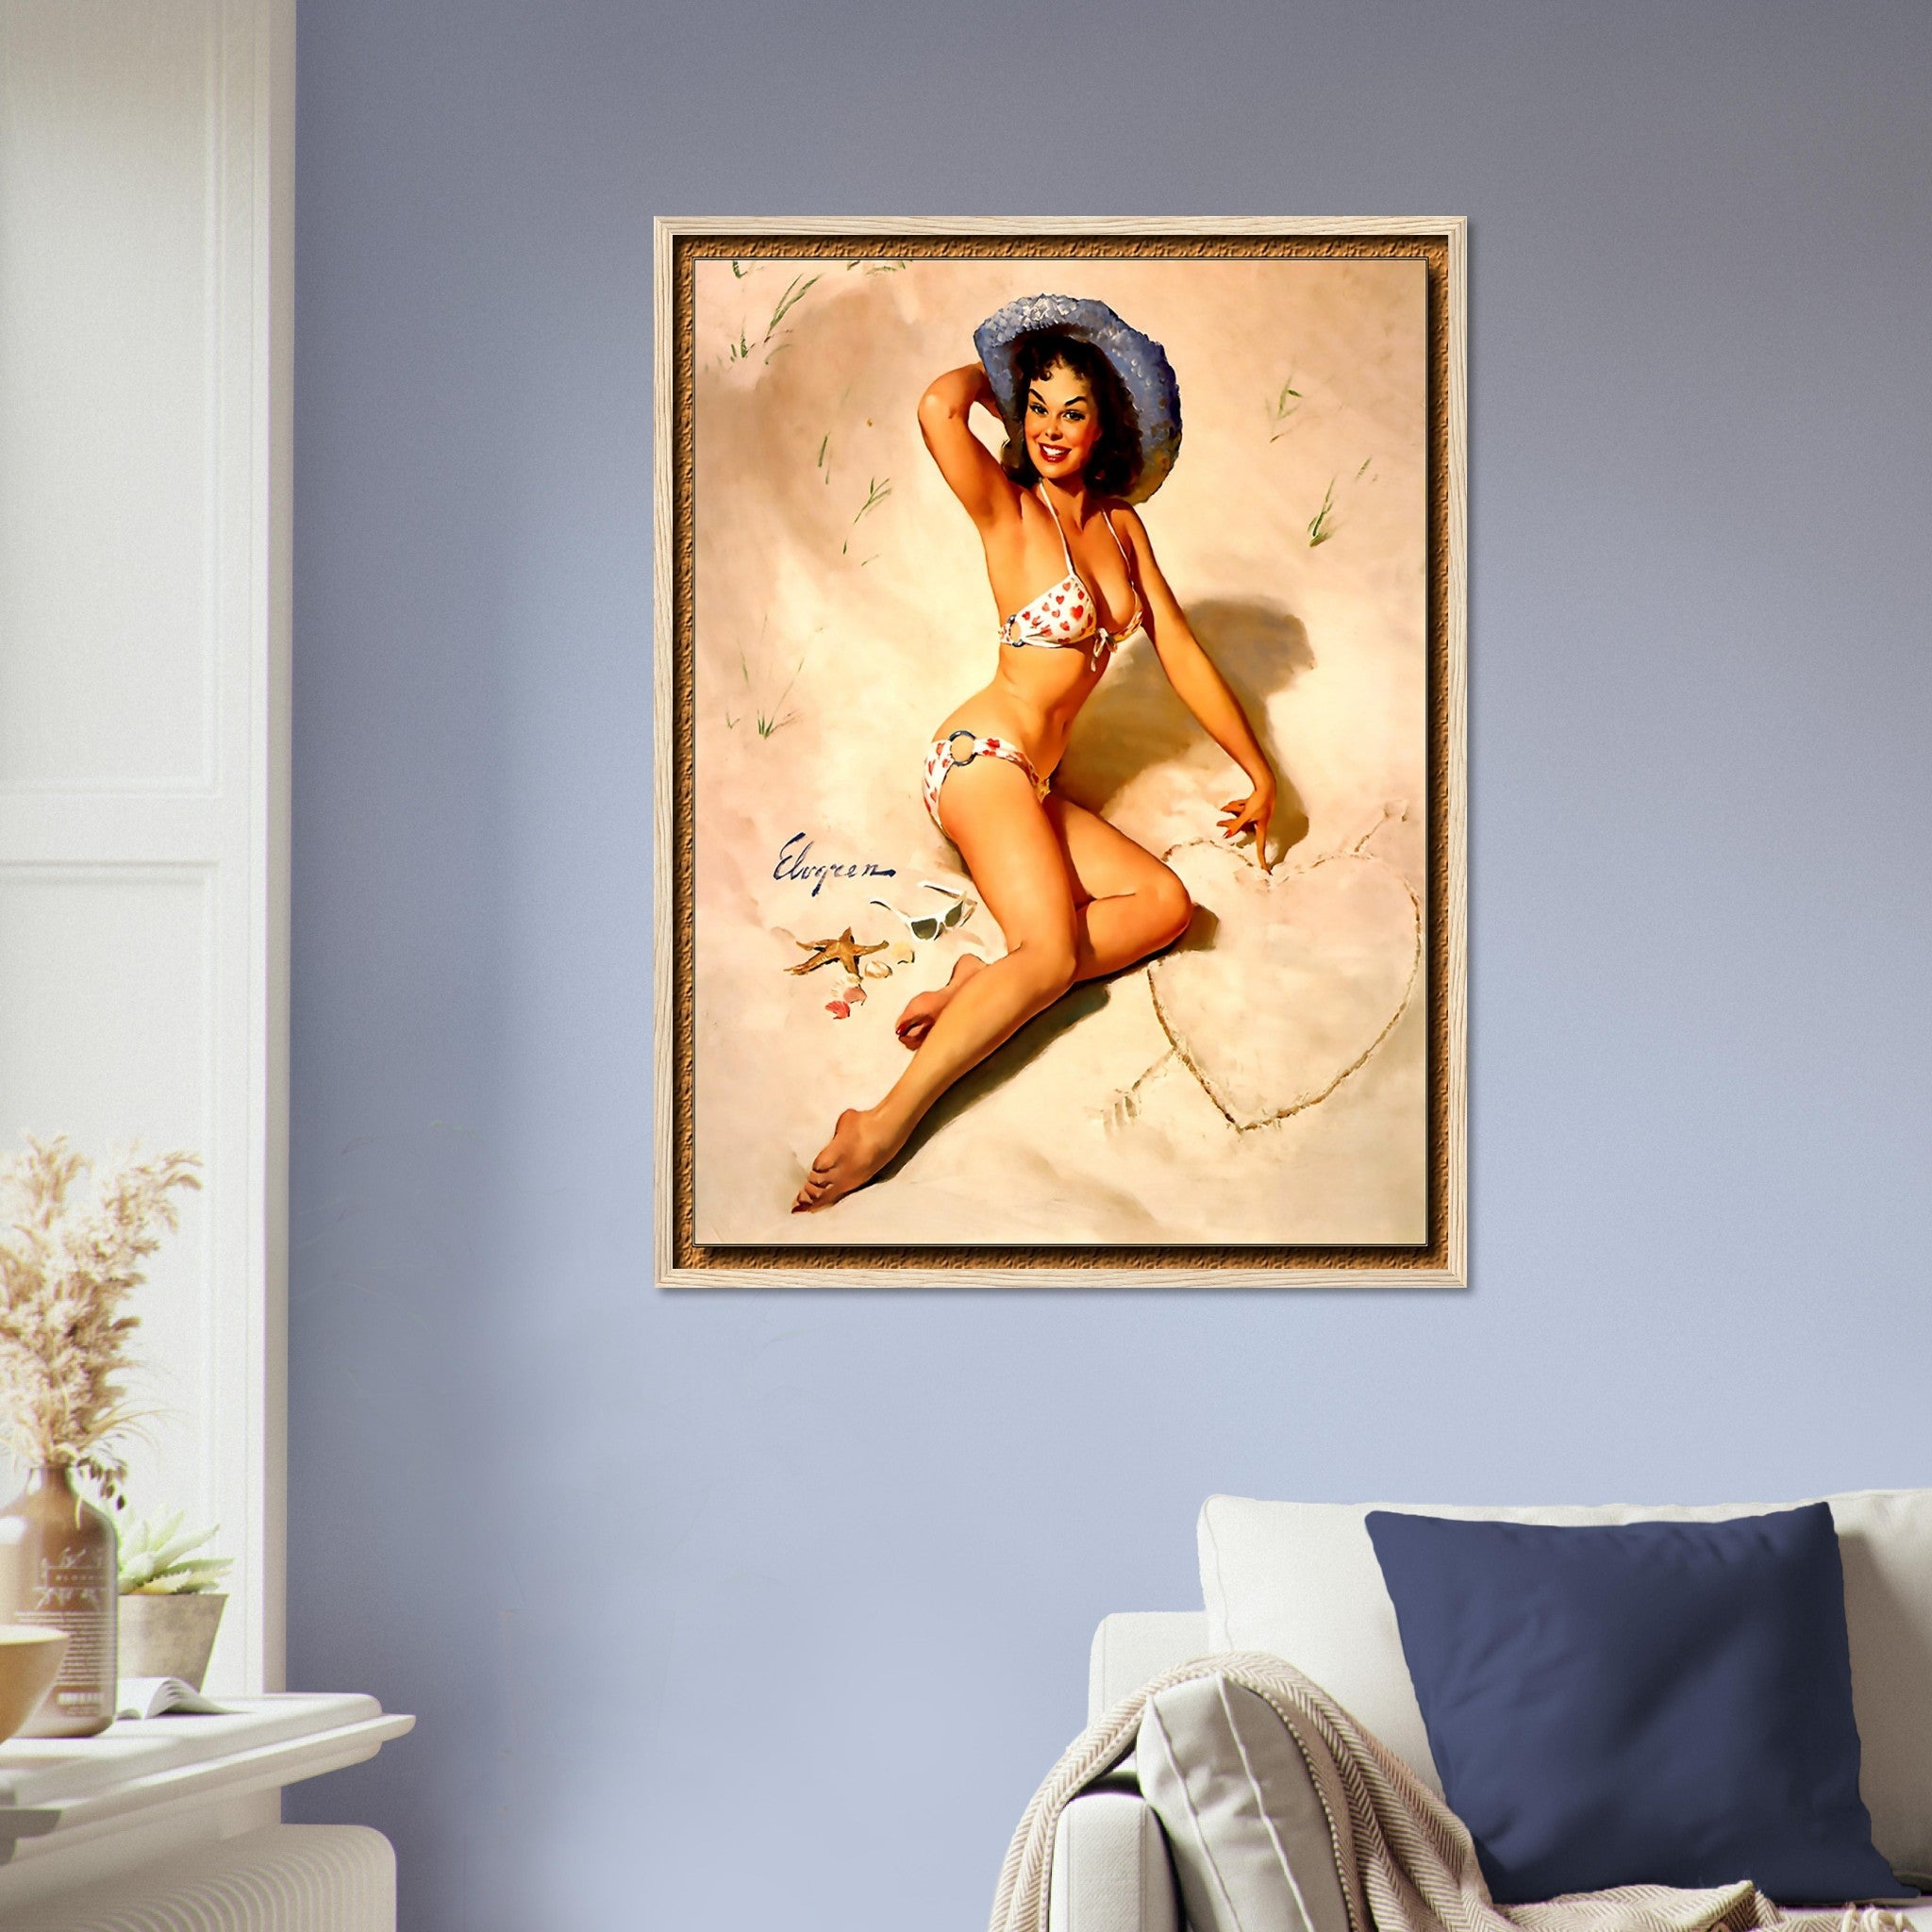 Vintage Pin Up Girl Framed Print, Bikini With Hearts, Gil Elvgren - Vintage Art - Retro Pin Up Girl Framed - Late 1940's - 1950's - WallArtPrints4U